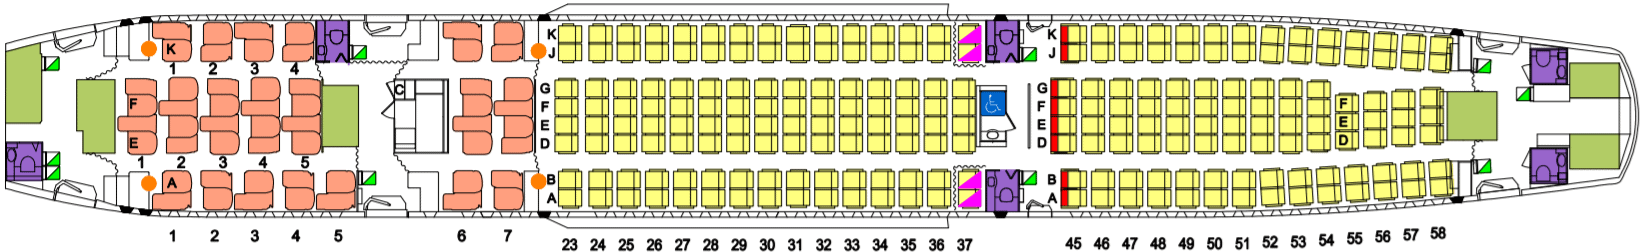 Qantas A330-200 Seat Map (251)